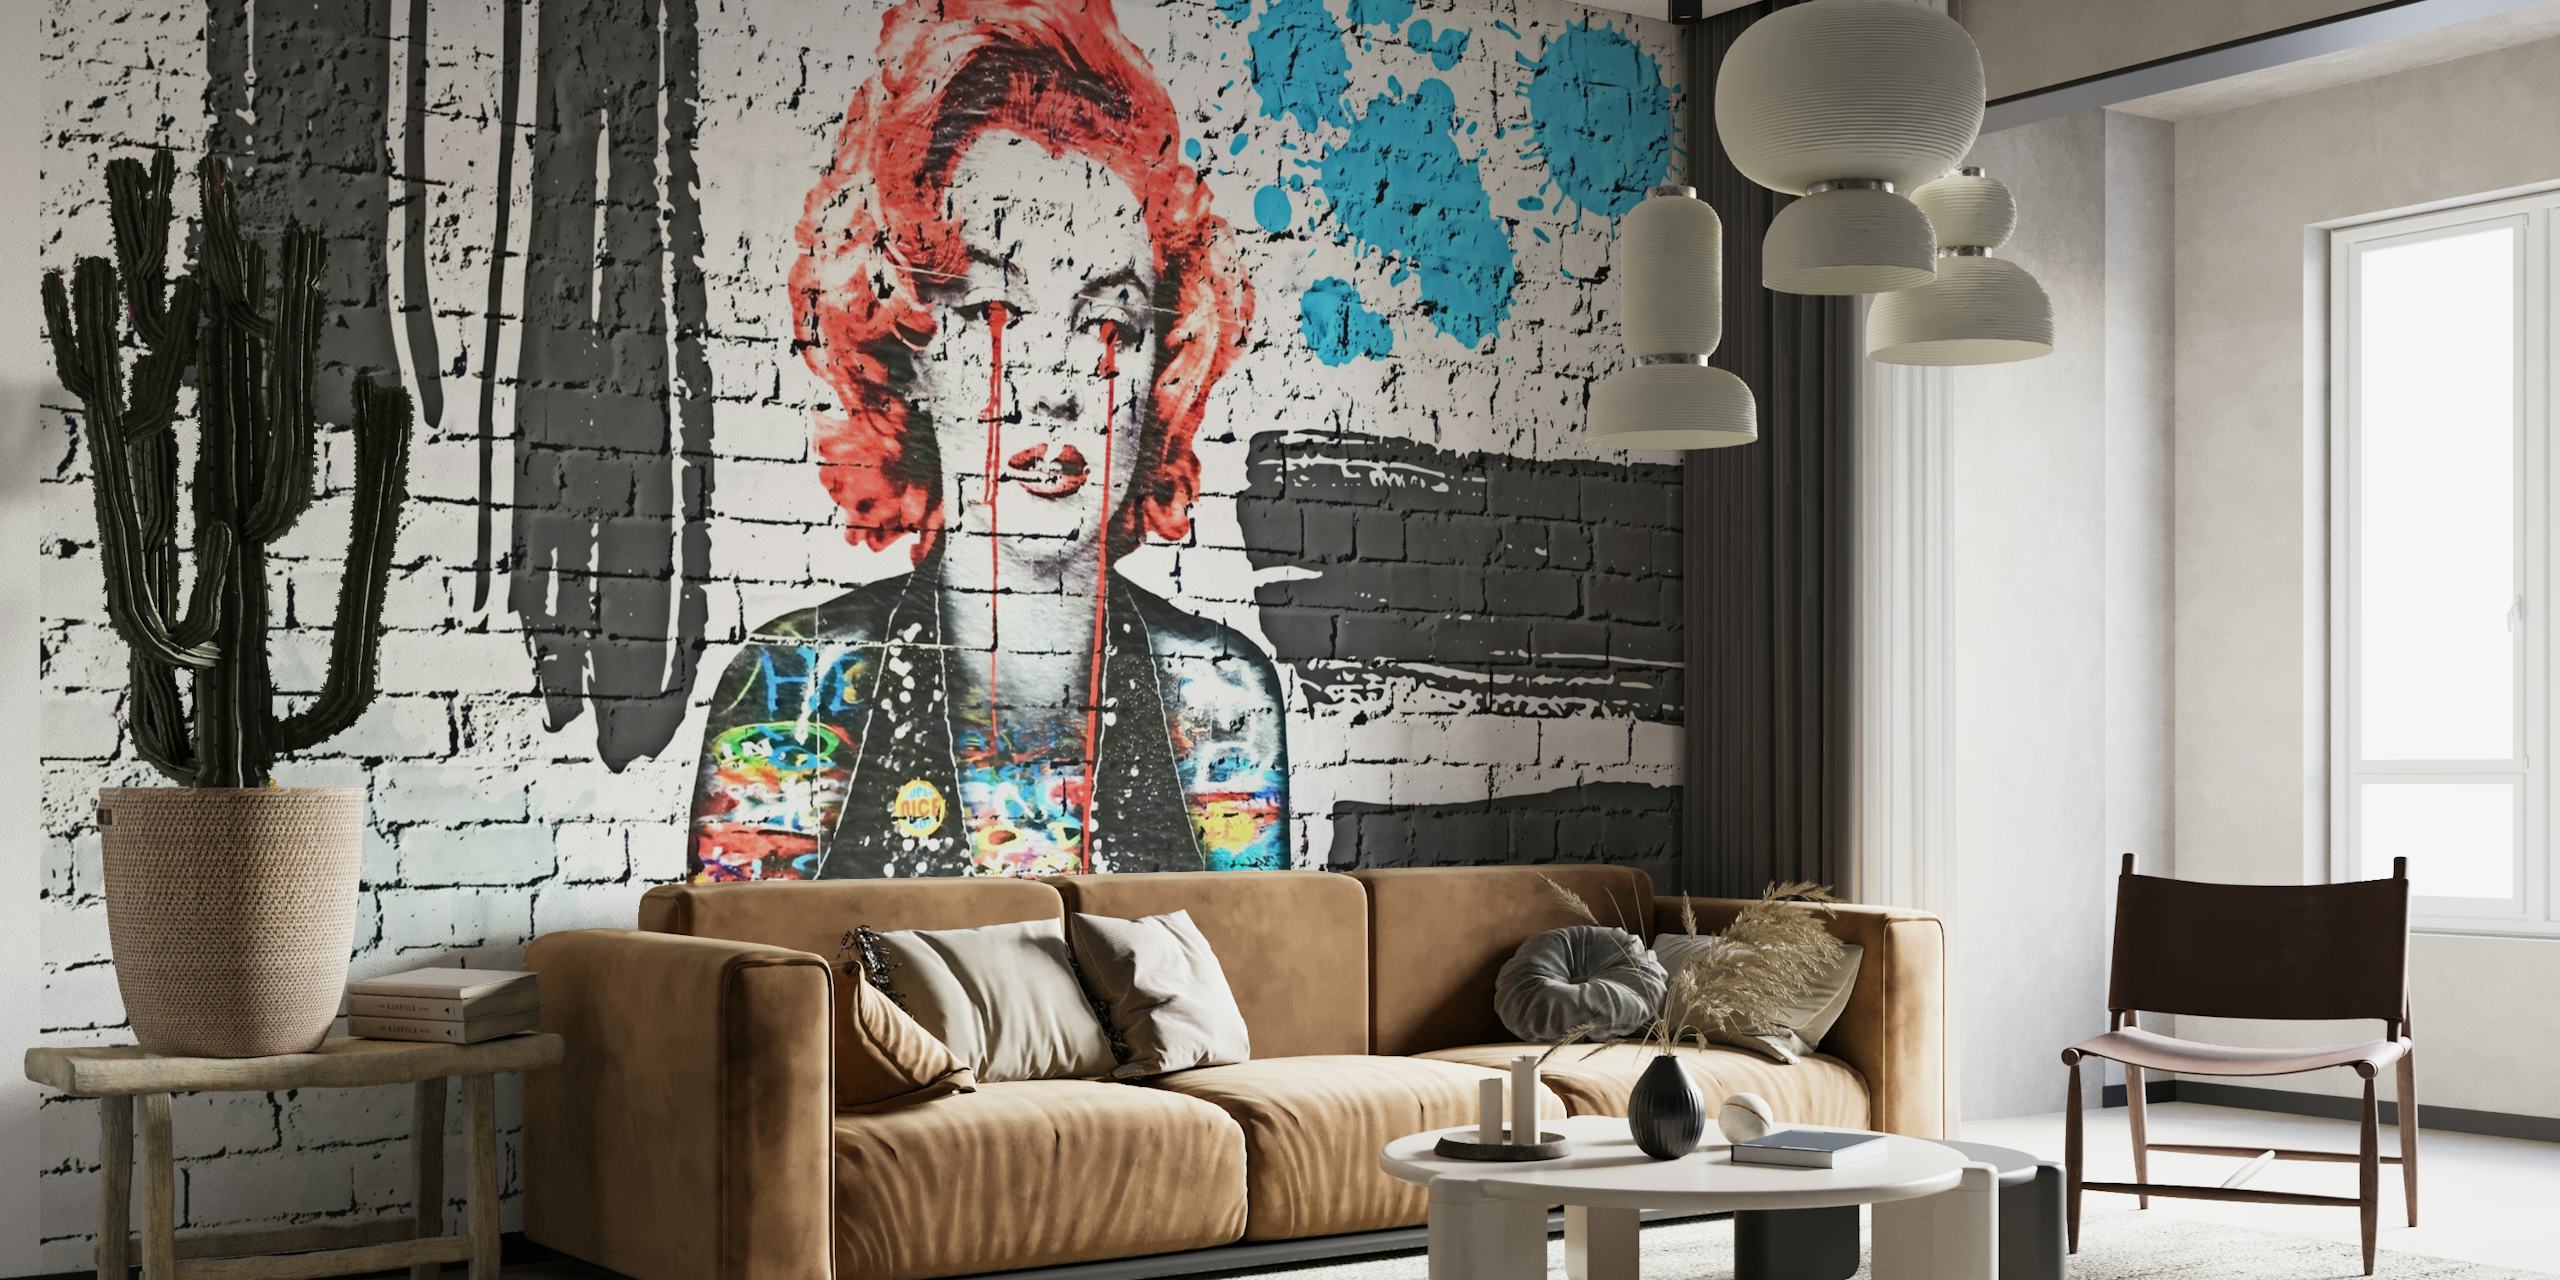 Vægmaleri i graffiti-stil med levende popkunstelementer på en murstensbaggrund til moderne interiør.